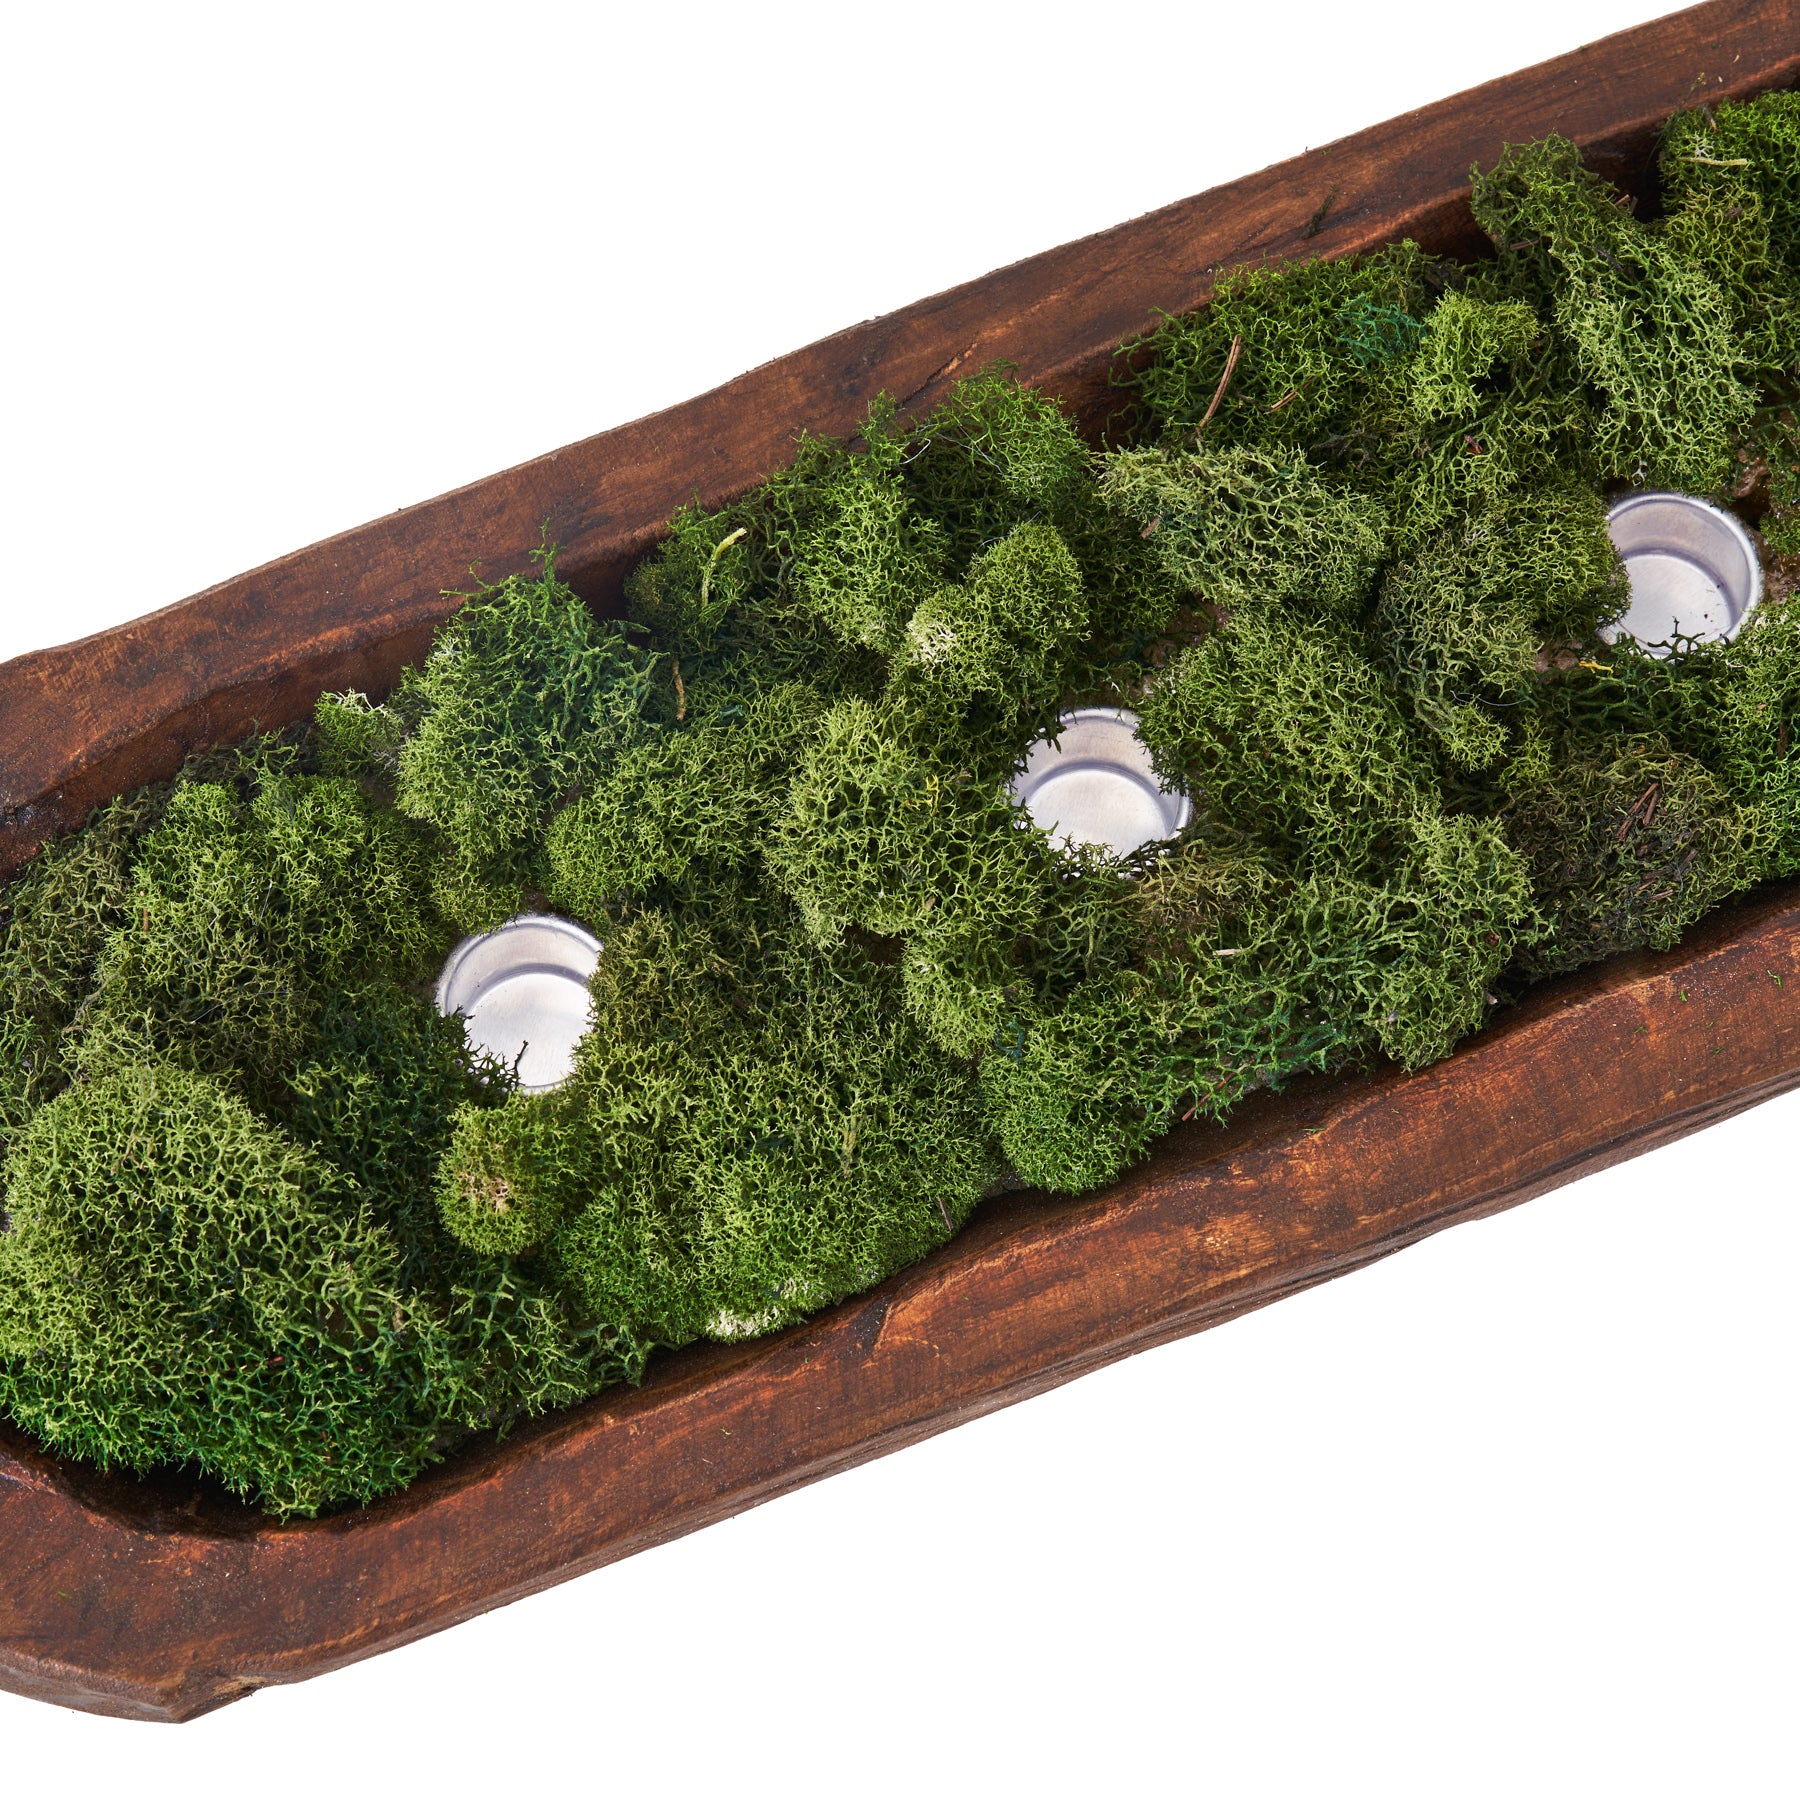 Oak Wood Slice Round with moss